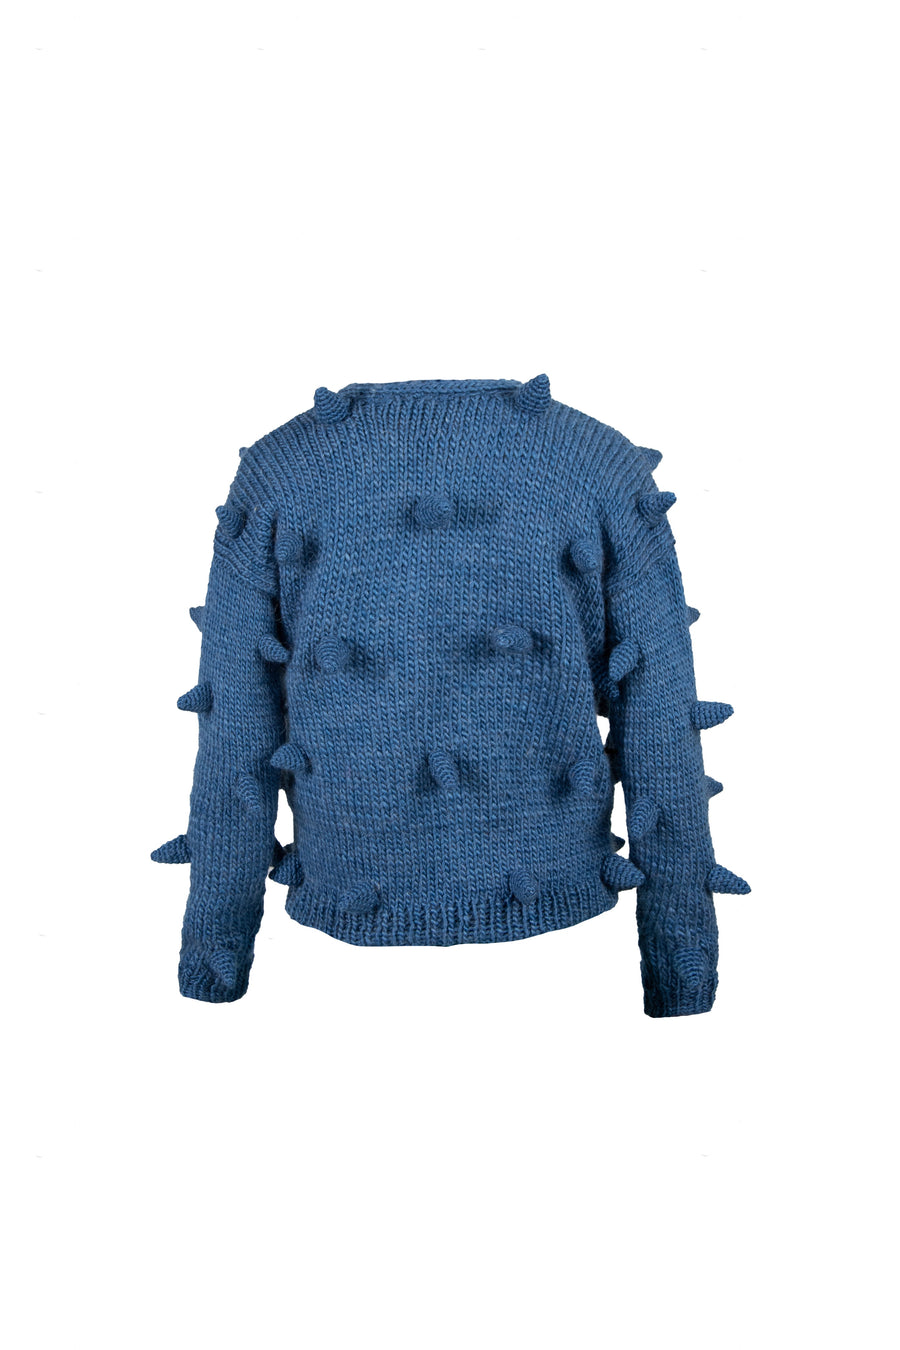 Spiky Navy Sweater